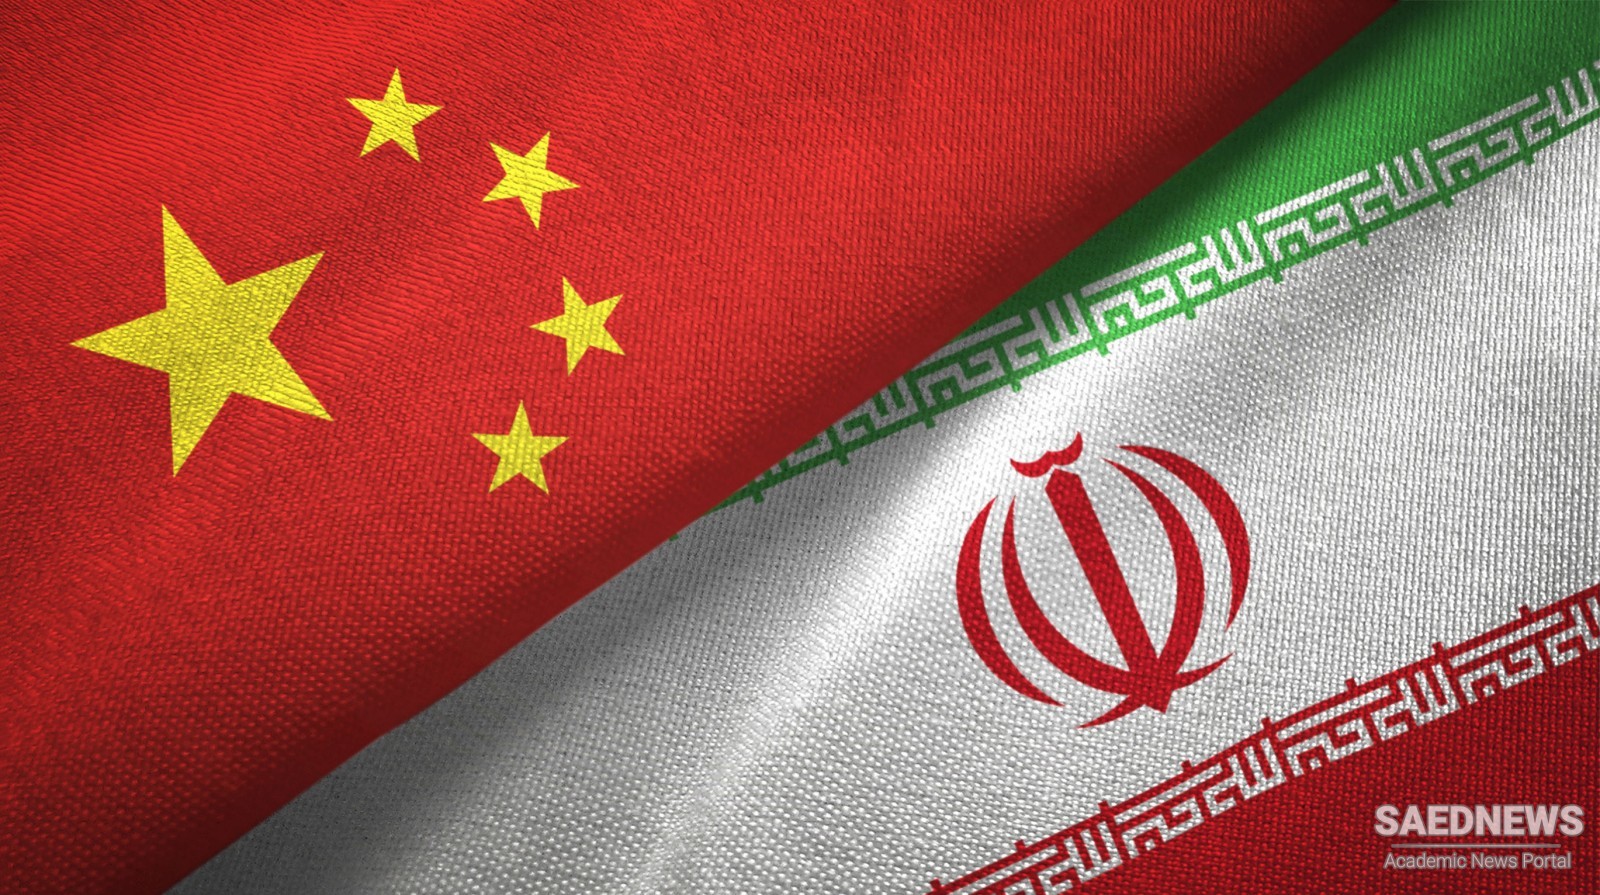 China blasts US sanctions on Iran with launch of strategic partnership